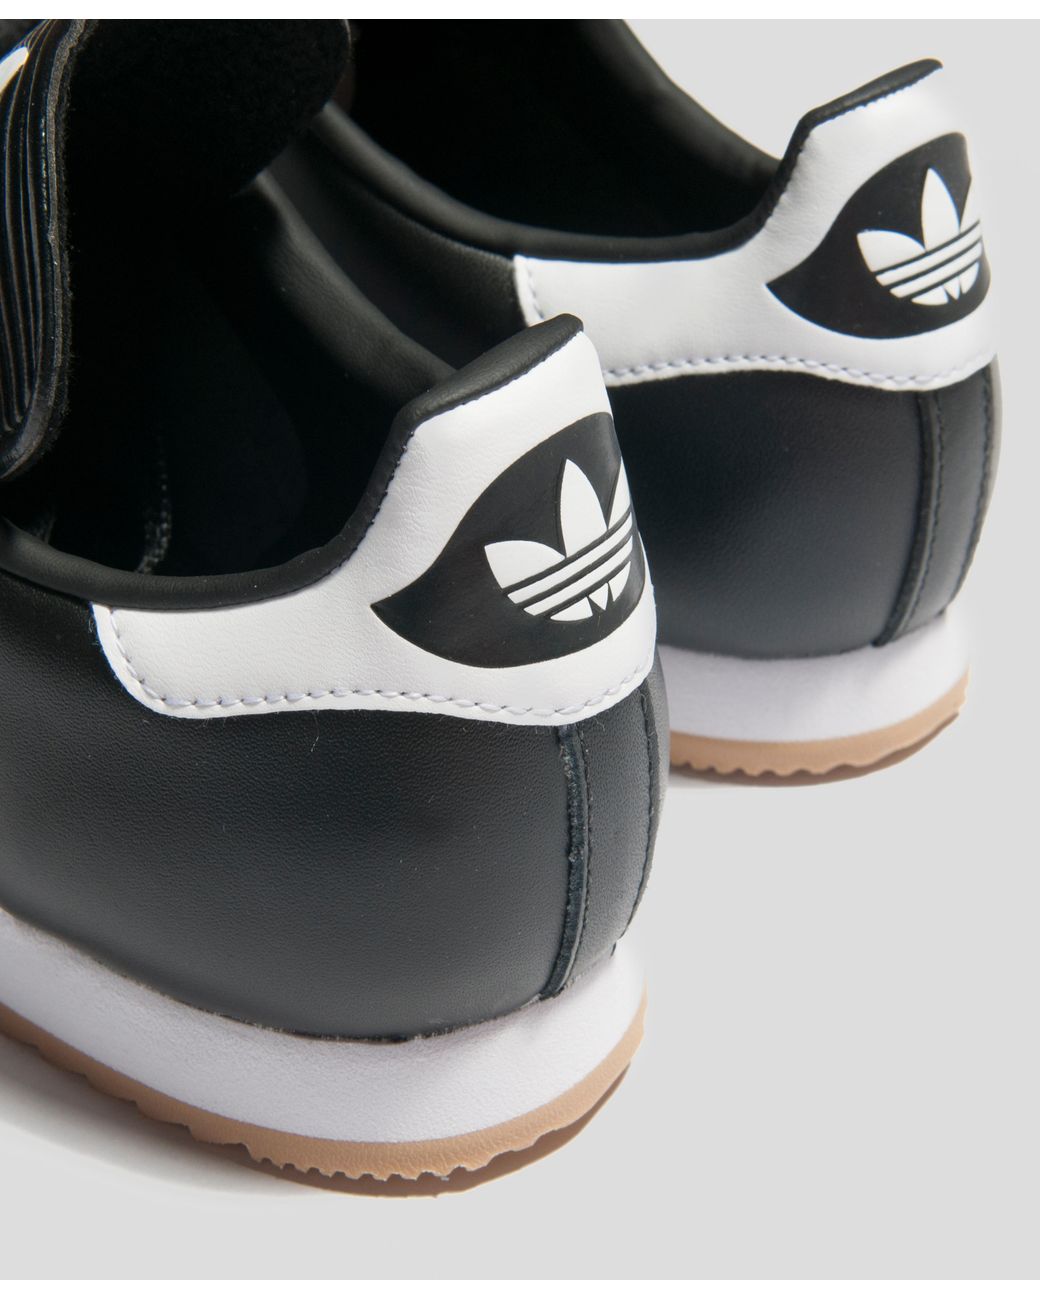 adidas Originals Rubber Samba Super Trainers in Black,White (Black) for Men  - Save 48% | Lyst Australia